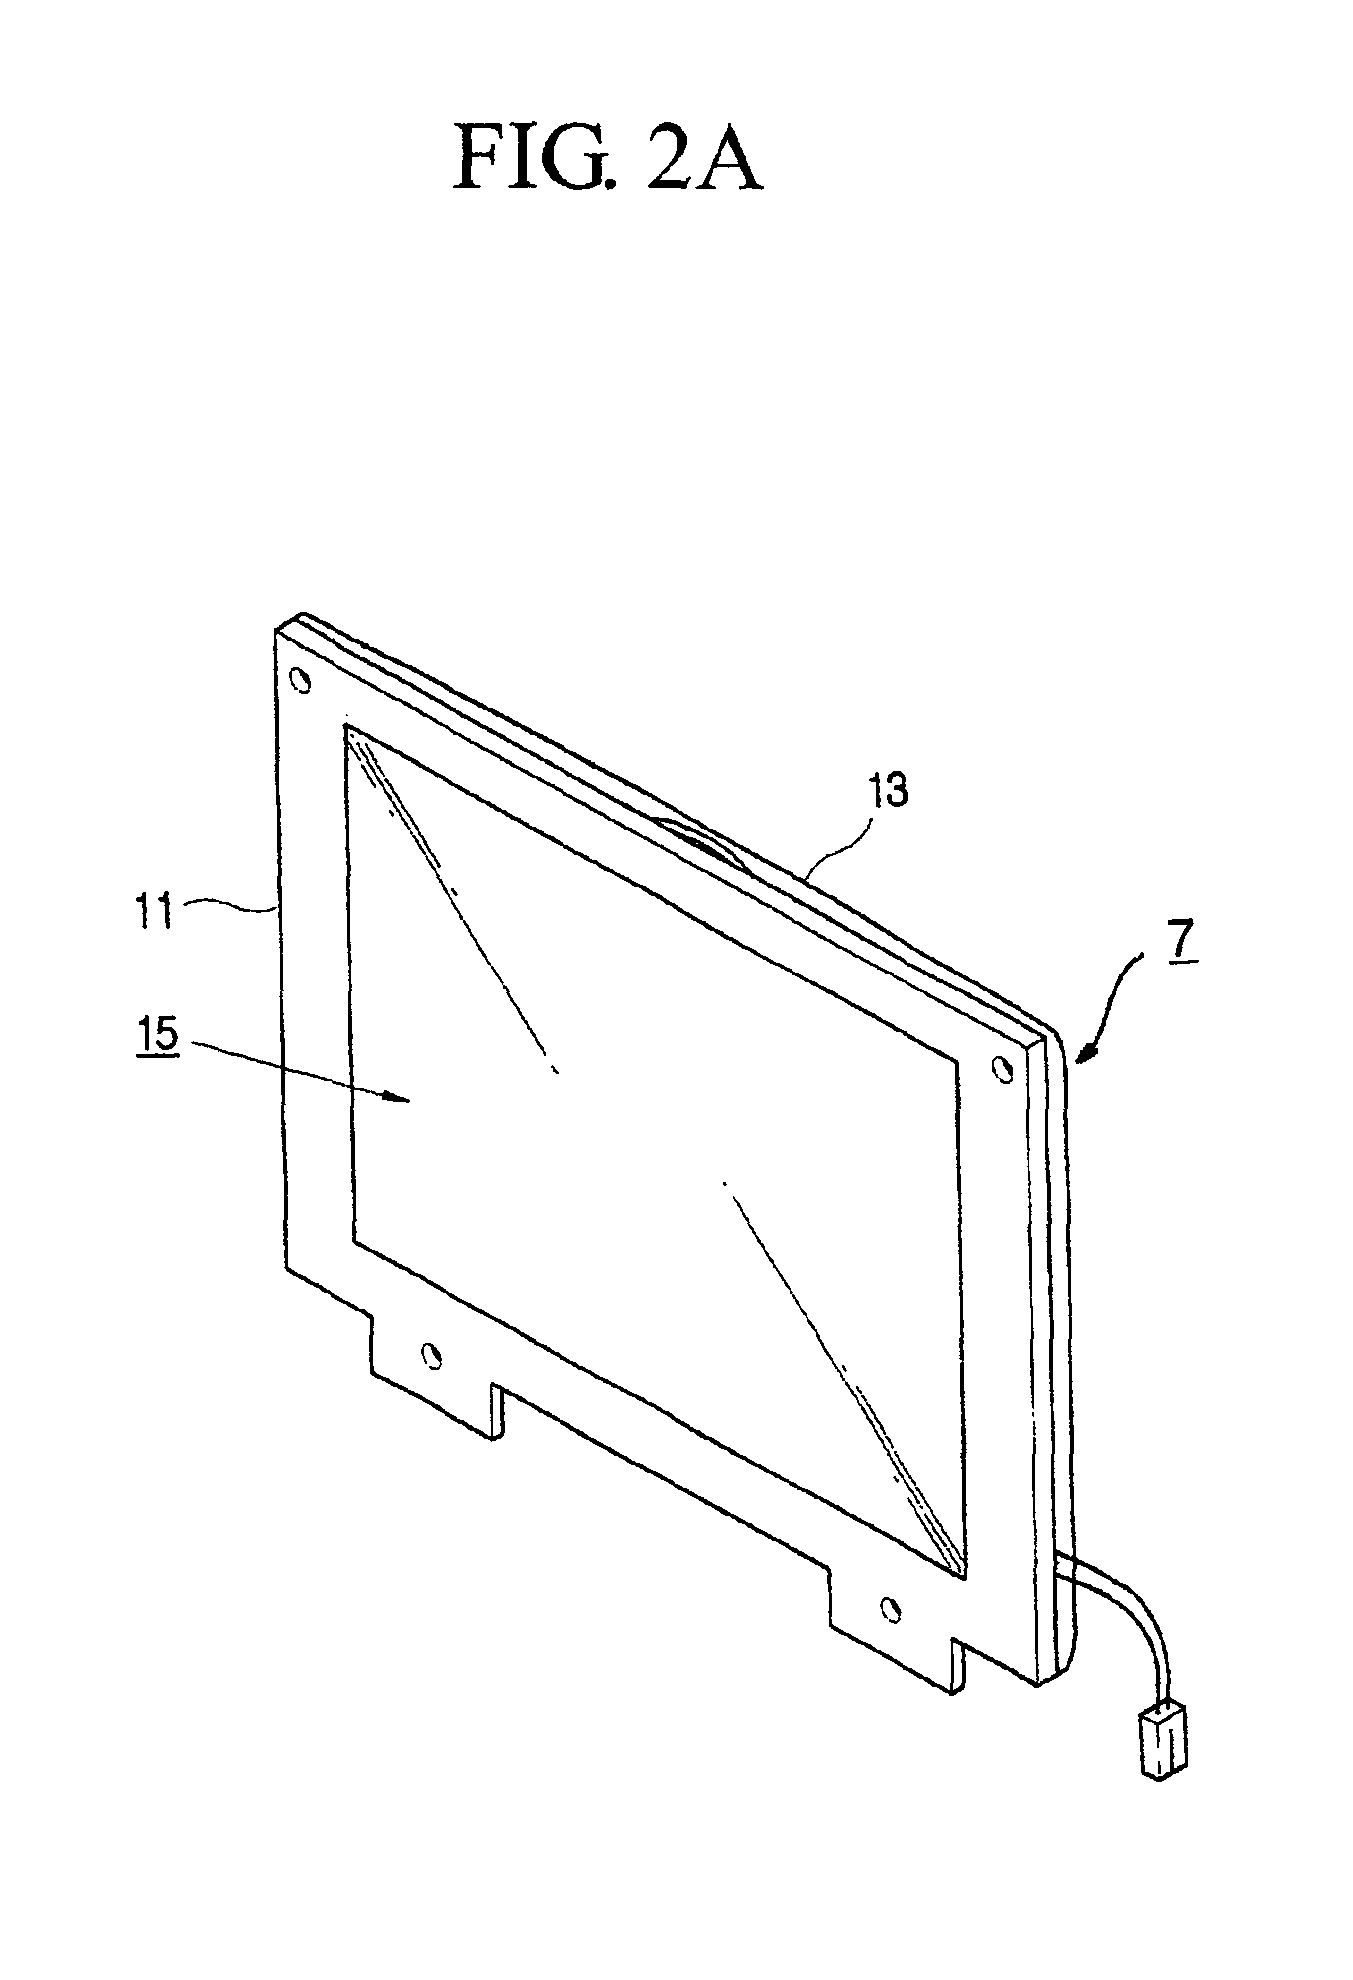 Displaying apparatus with flat panel